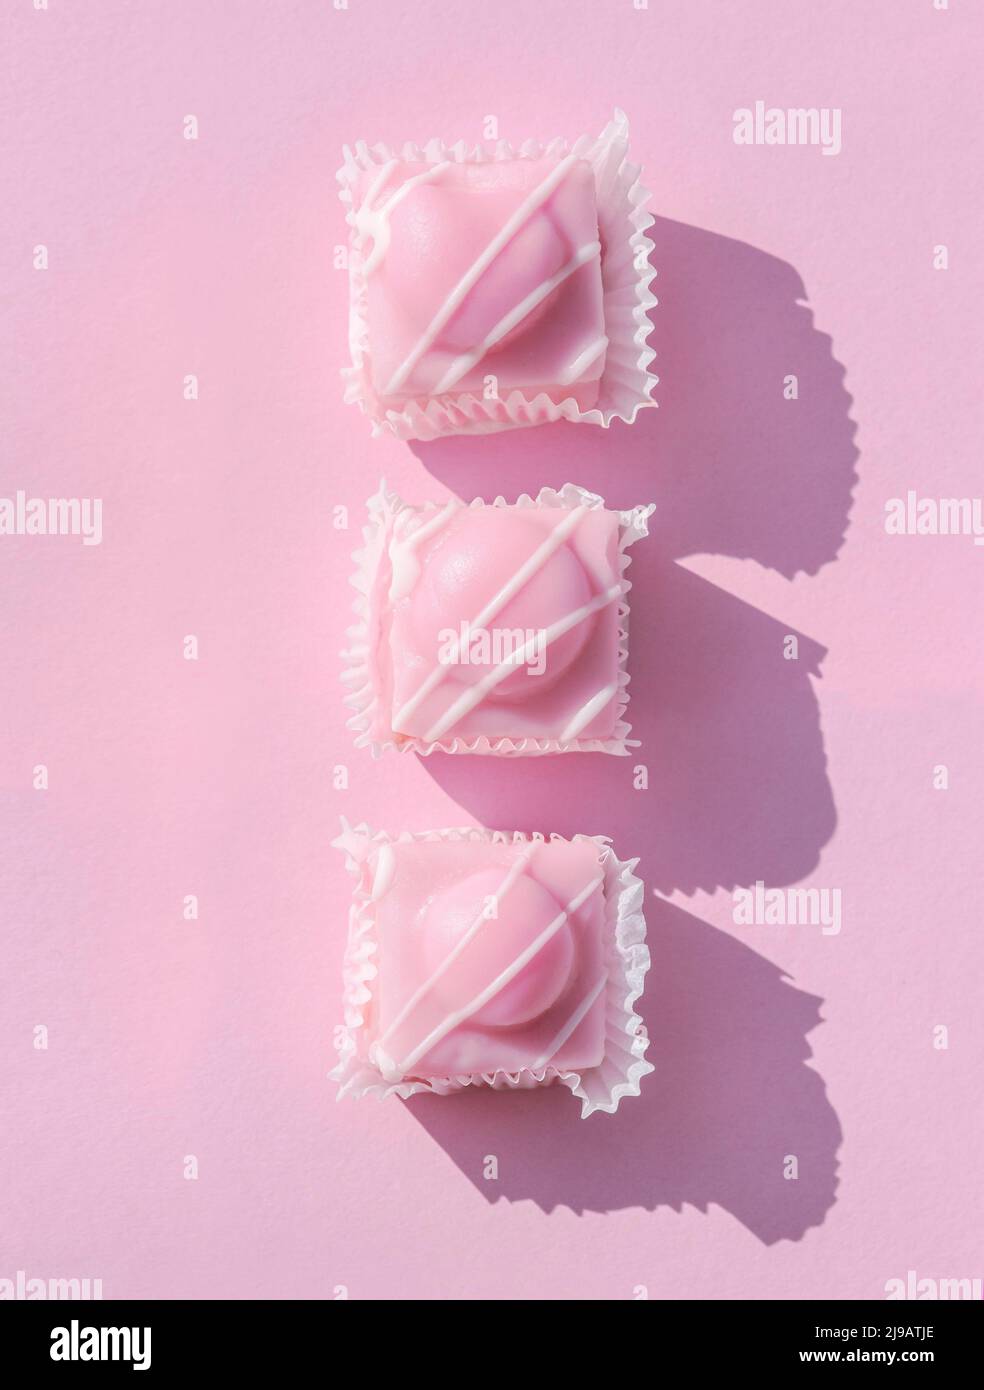 Pink fondant icing on sponge cakes set on a pastel pink background. Stock Photo